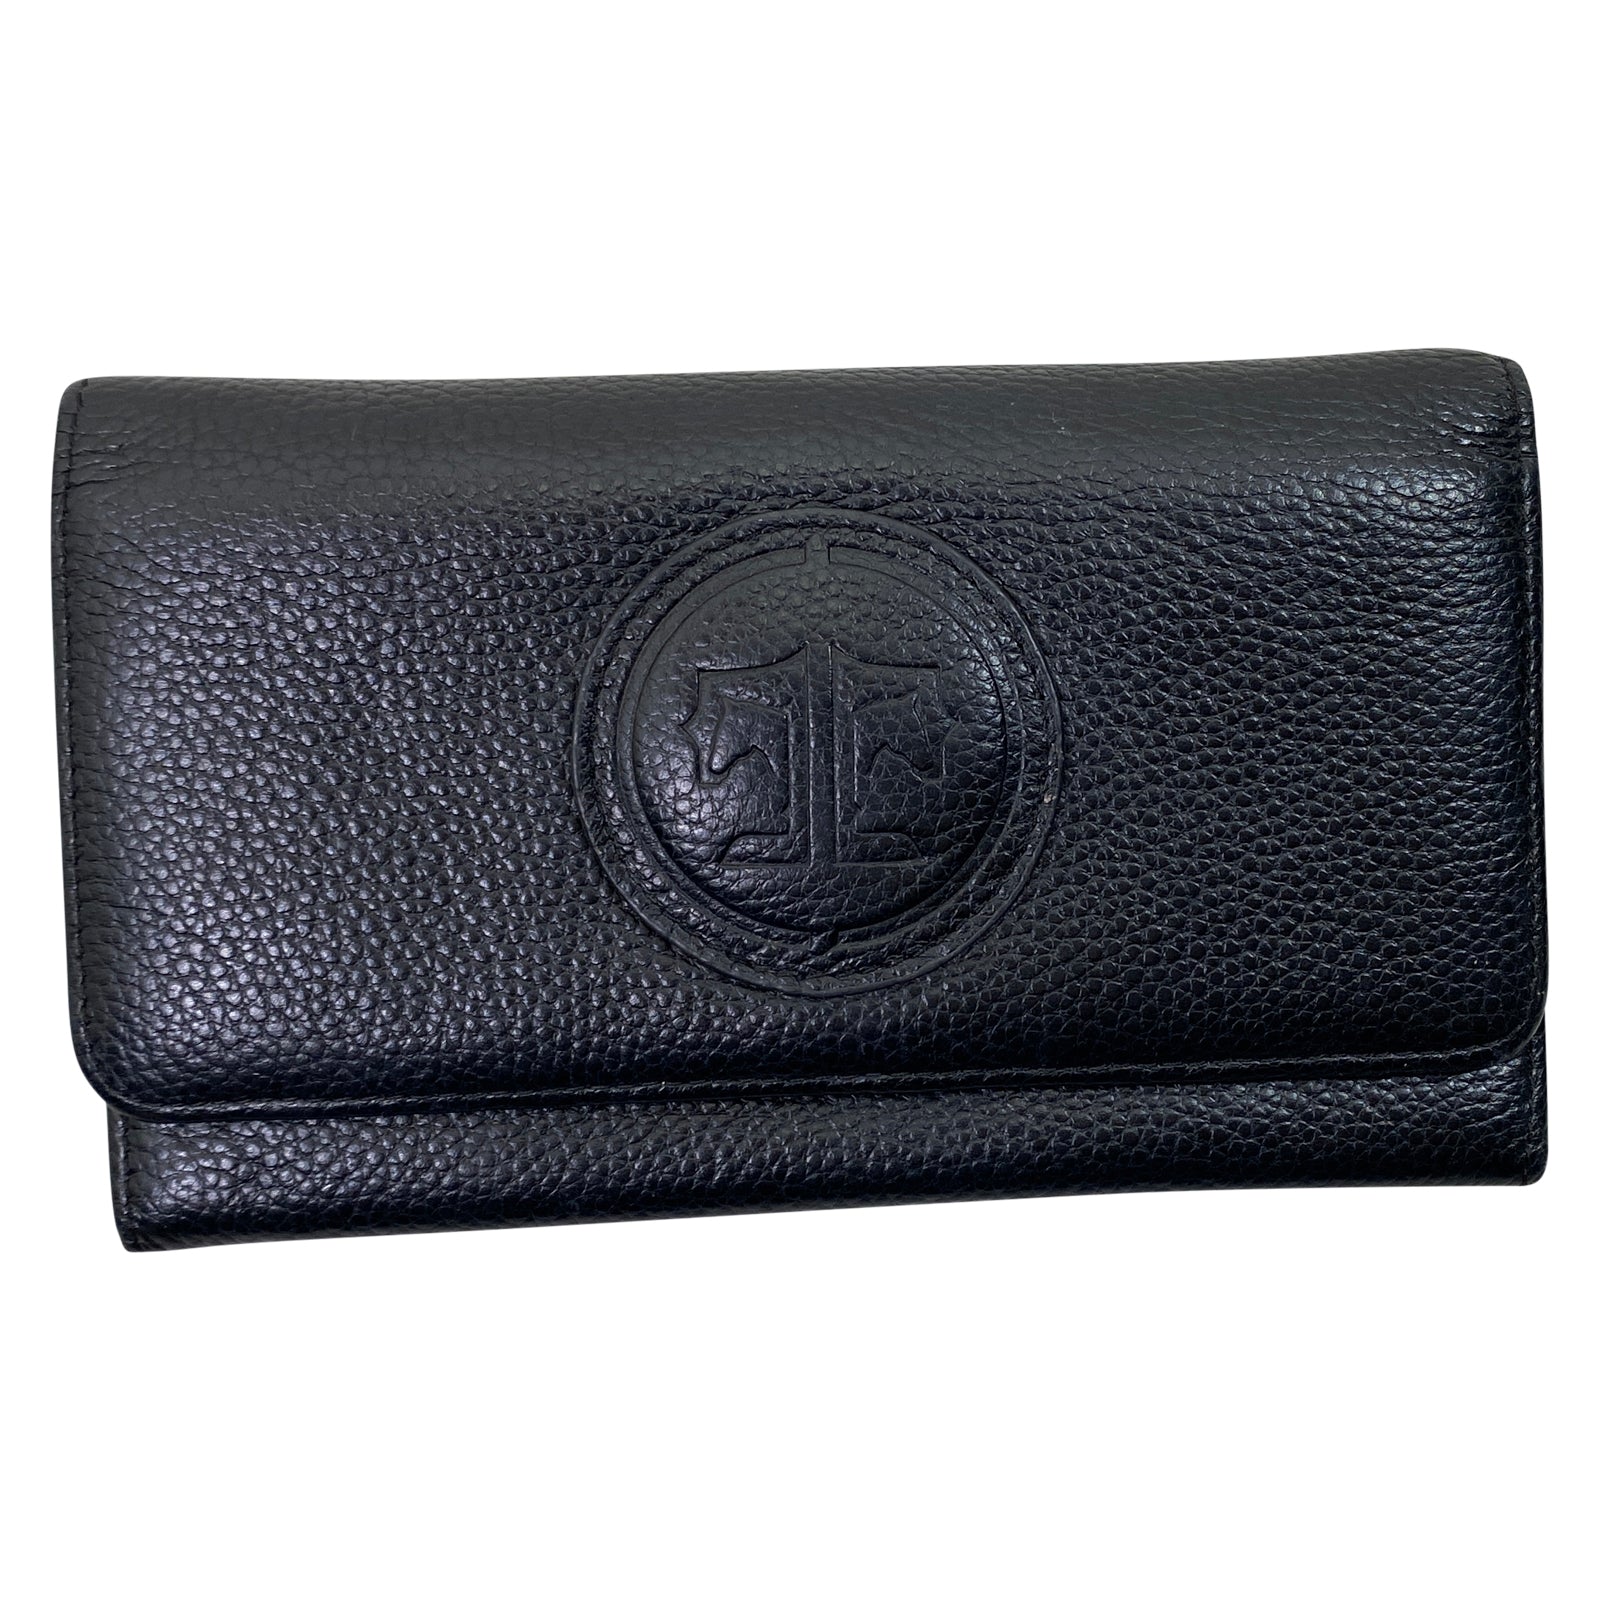 Tucker Tweed Equestrian Wallet in Black - 7.25" x 4.25"